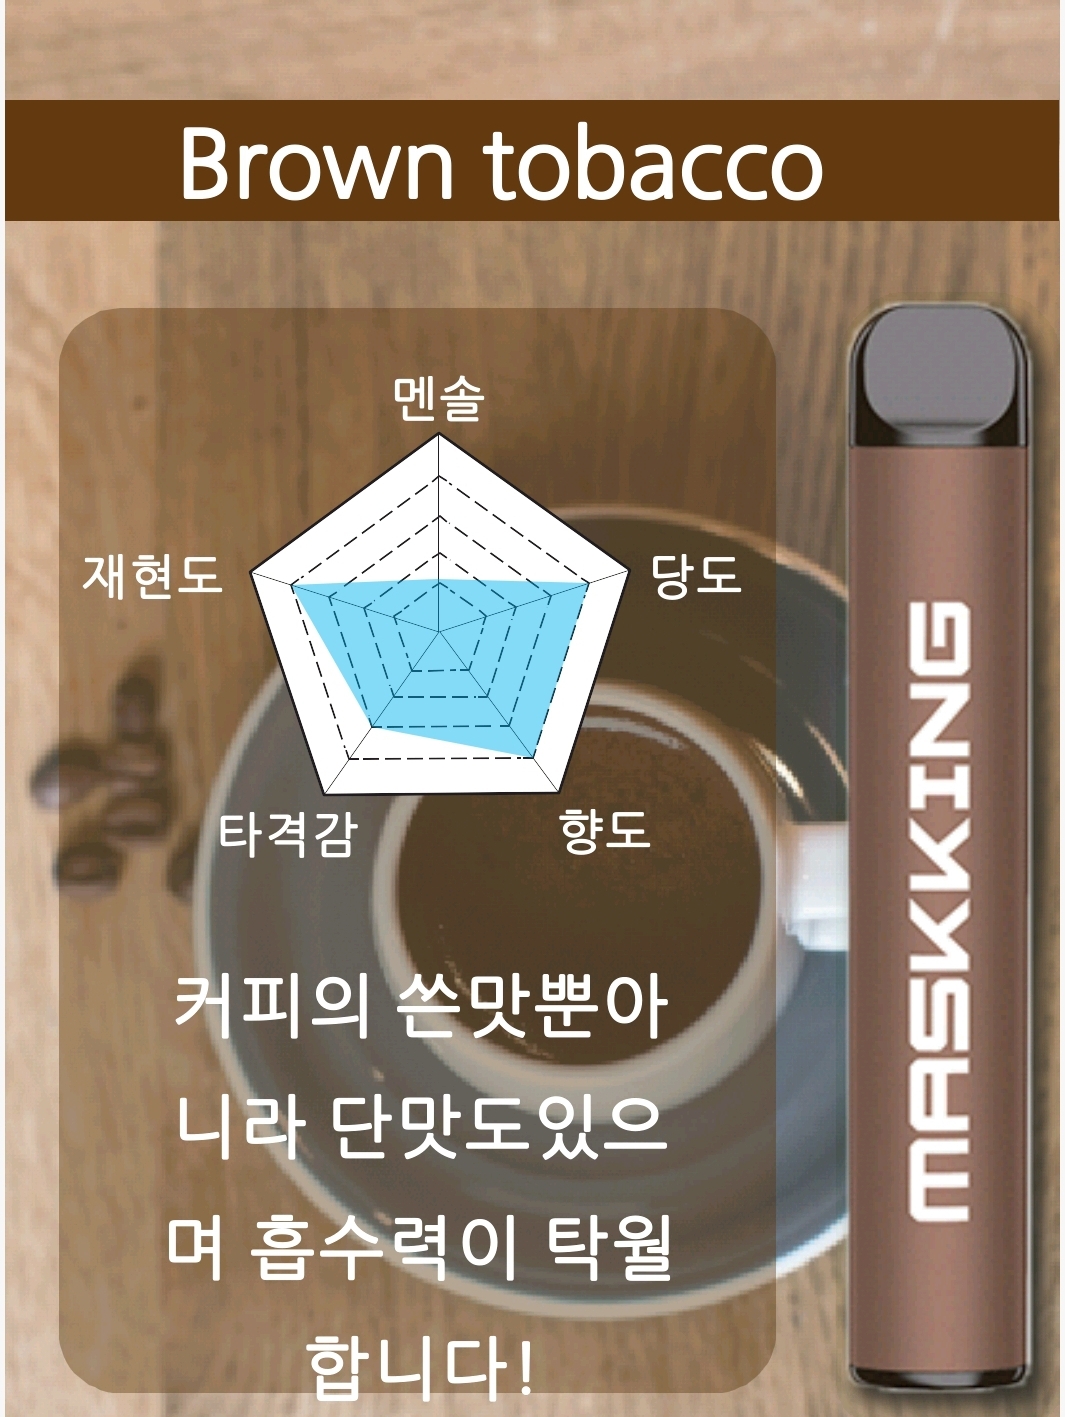 Brown tobacco